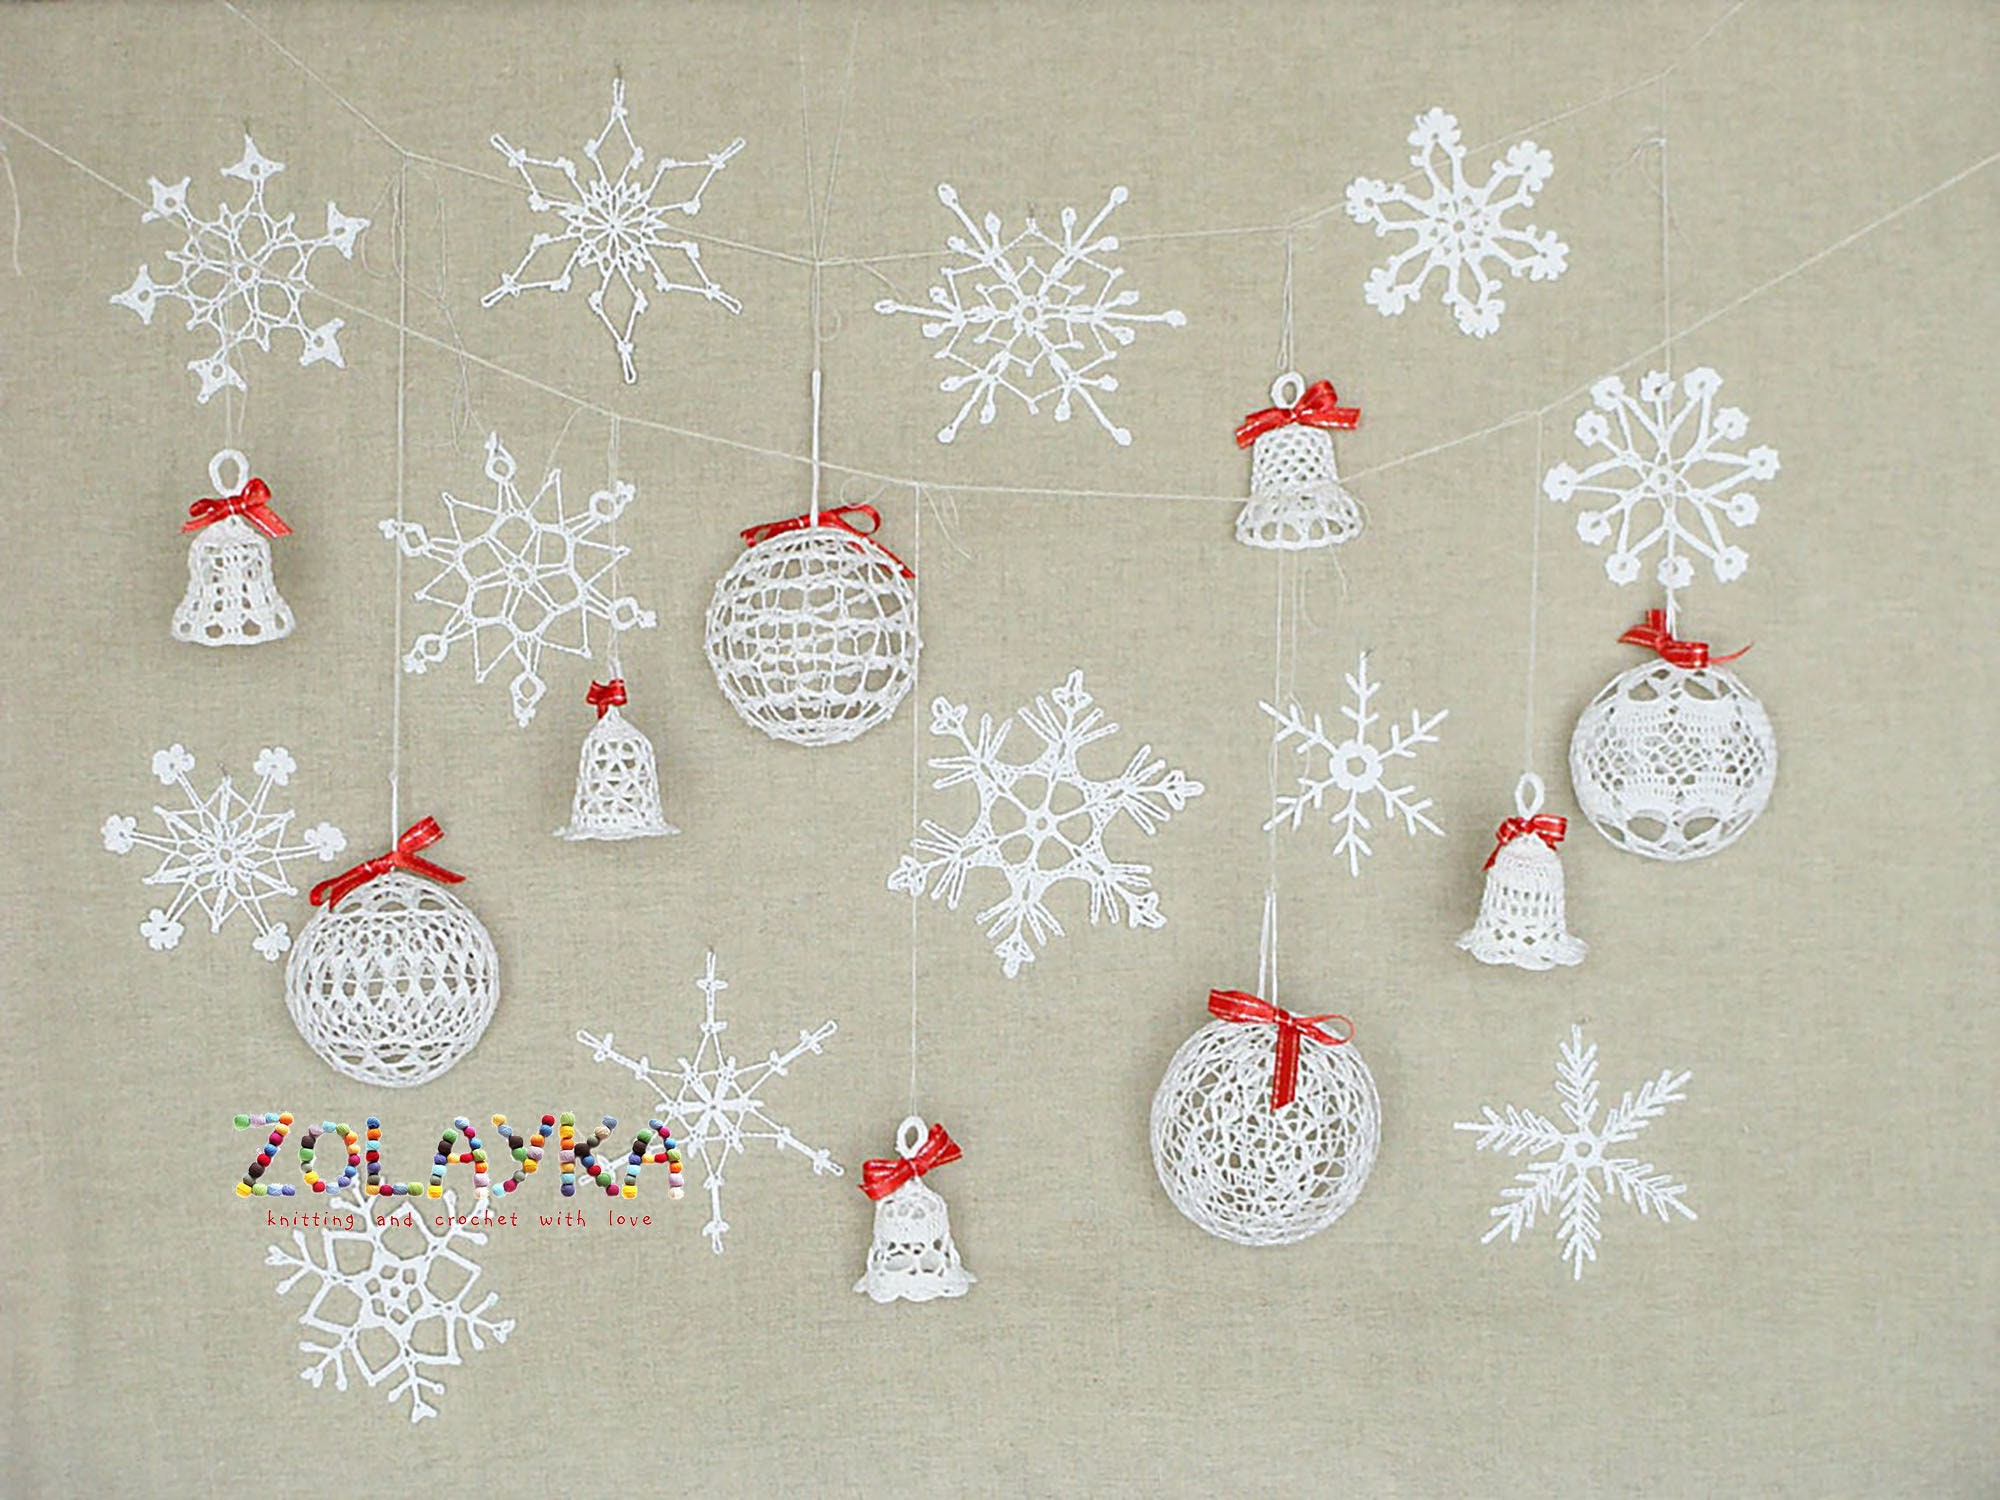 1bag/LOT.Mix Glitter christmas tree snowflake foam stickers Xmas party  decoration Creative activitity items Handwork wholesale - AliExpress